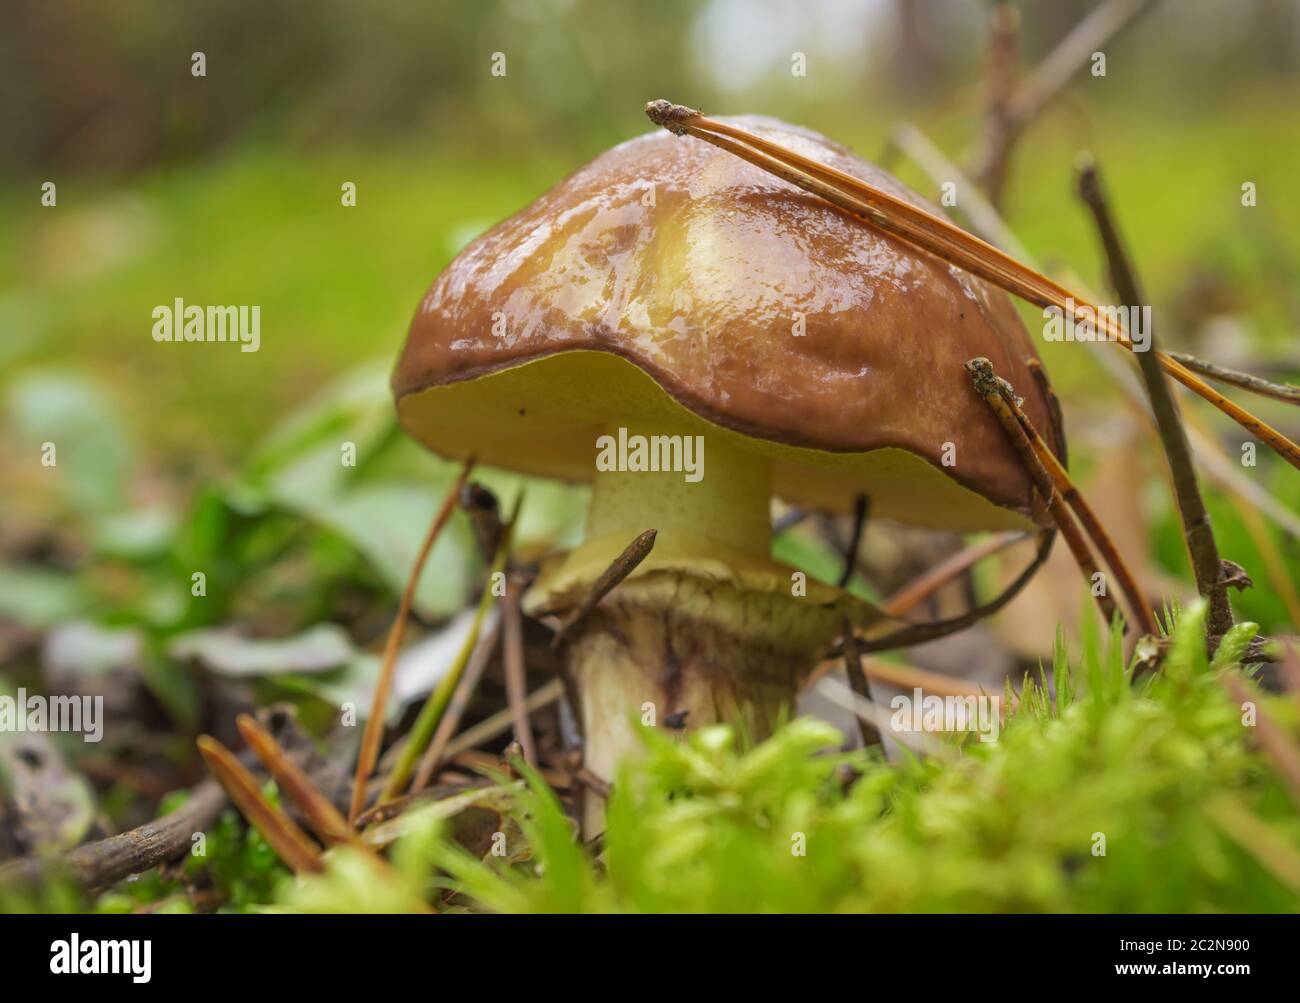 Mushroom greasers (Suillus) among moss Stock Photo